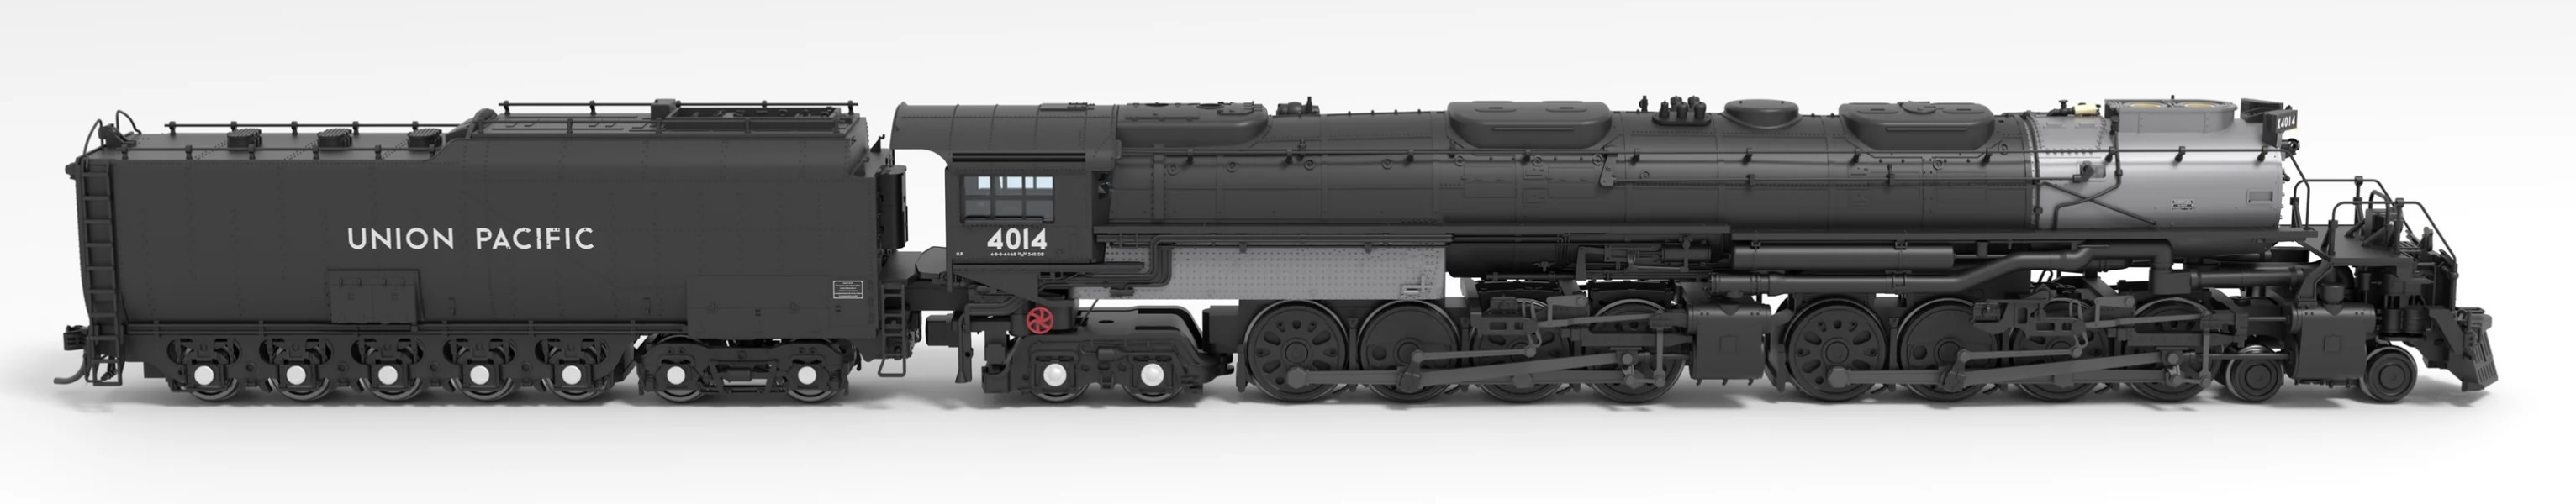 N Scale - Broadway Limited - 8995 - Locomotive, Steam, 4-8-8-4 Big Boy - Union Pacific - 4014